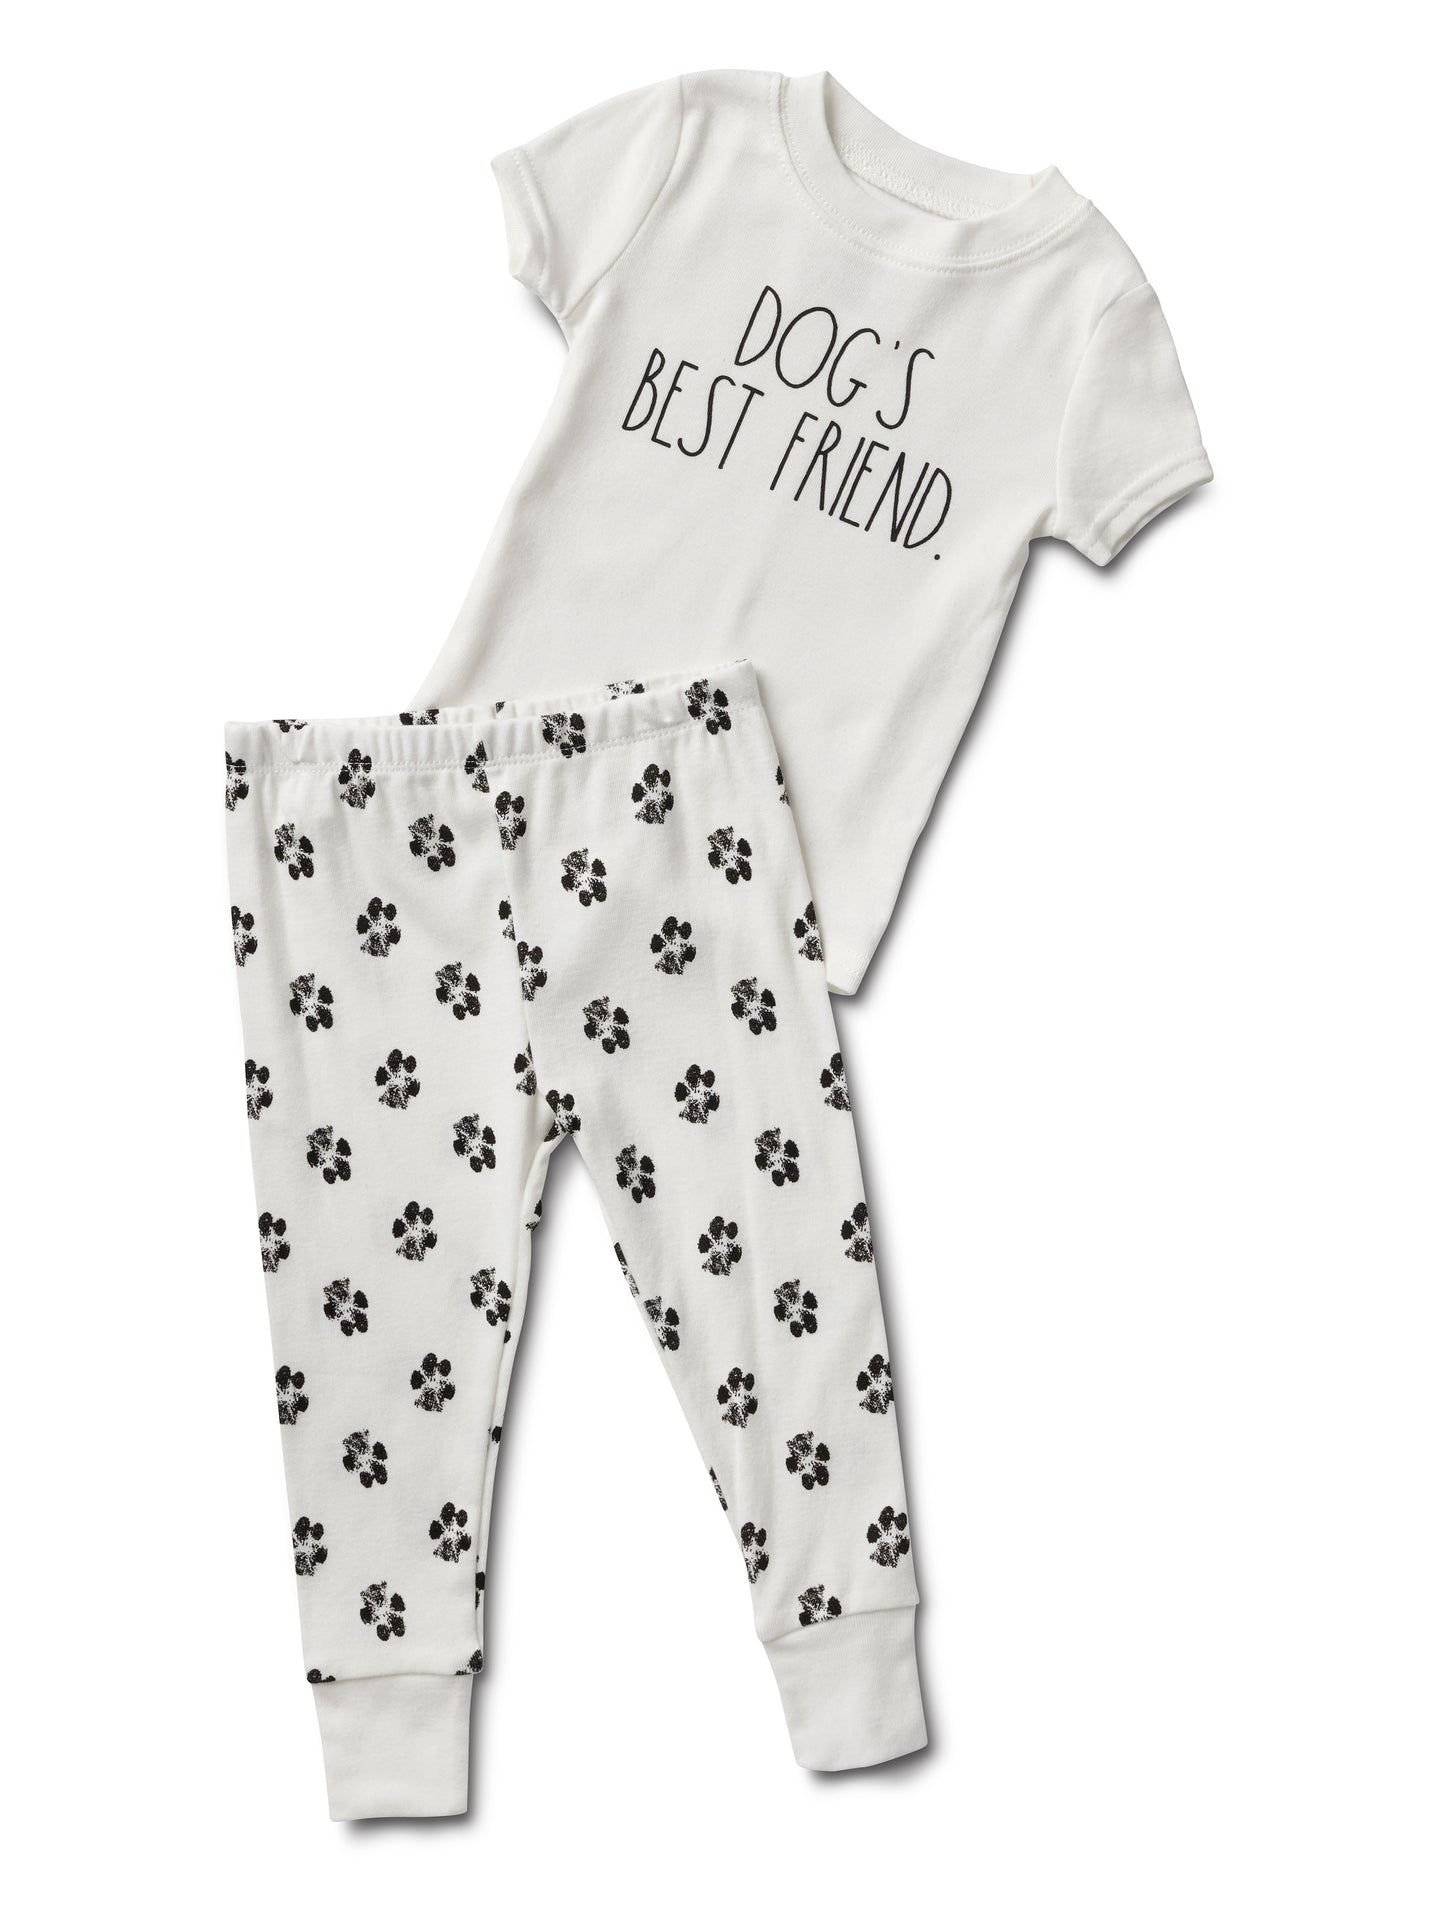 Boy's "DOGS BEST FRIEND" Short Sleeve Tee and Jogger Pajama Set - Rae Dunn Wear - B Pant Set